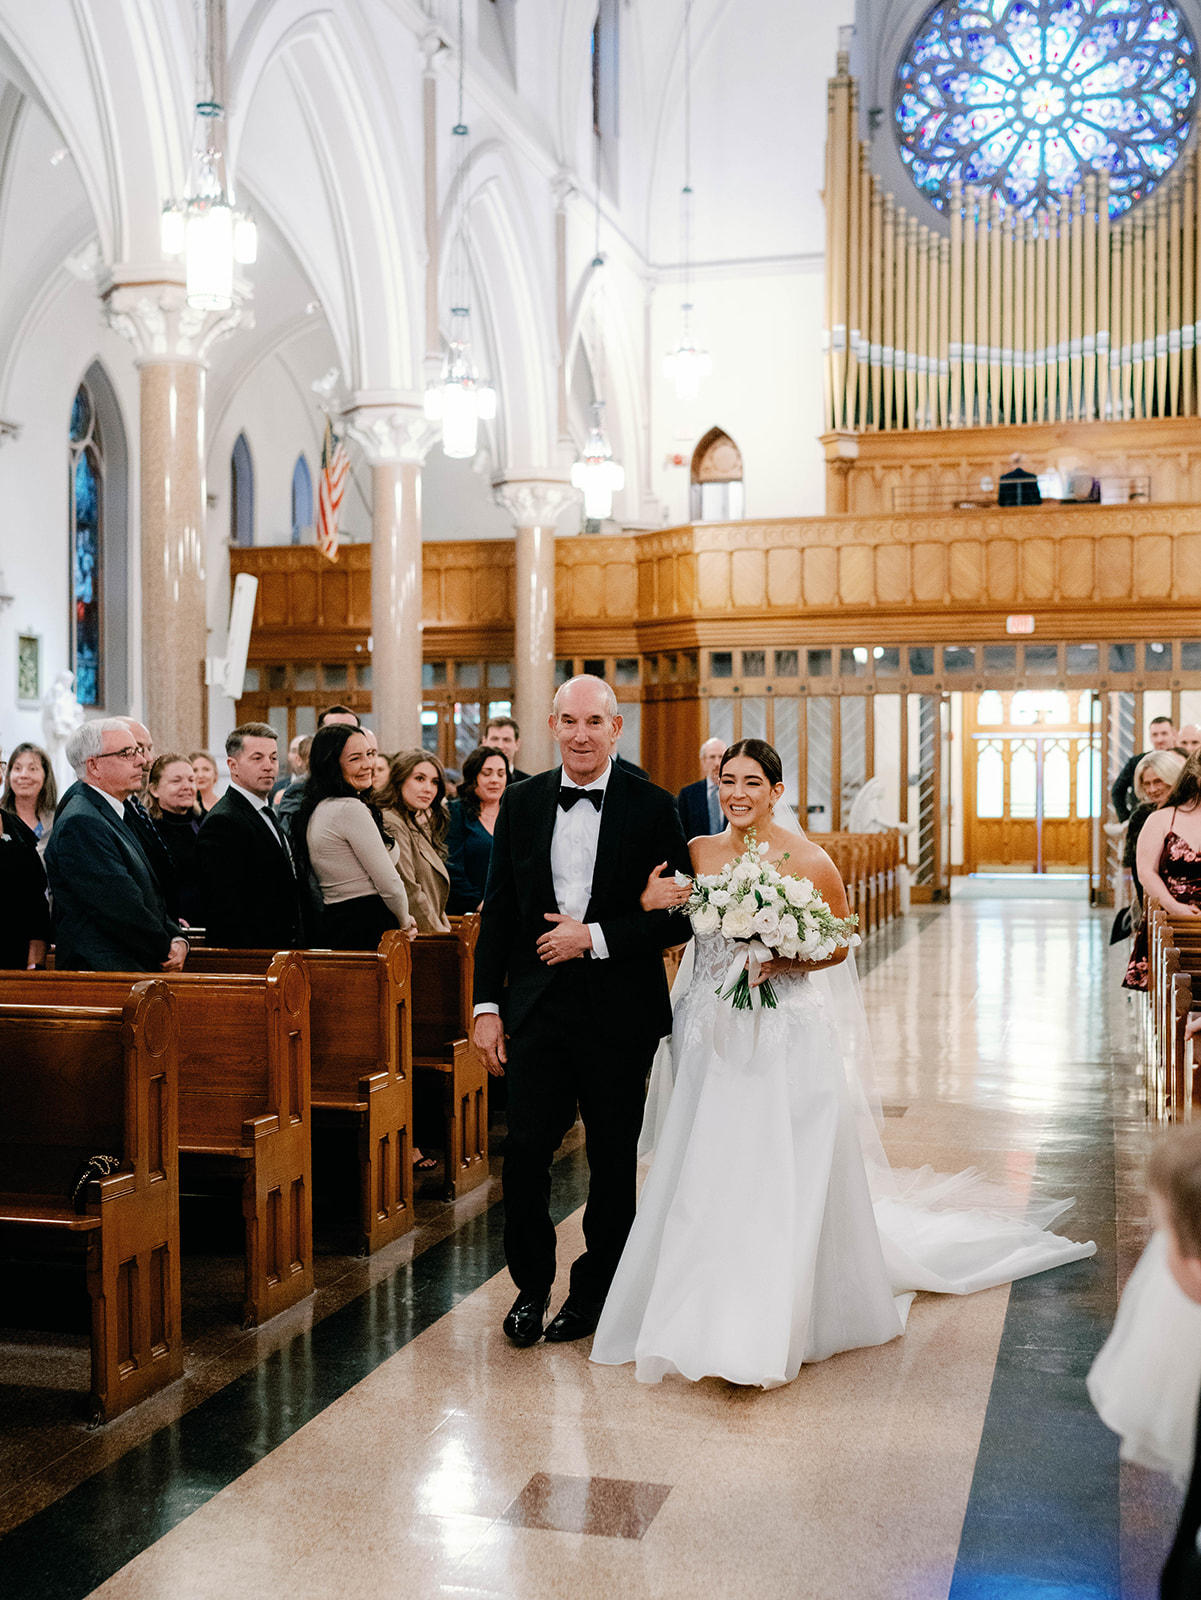 Wedding Ceremony at St Patricks Parrish in Washington DC